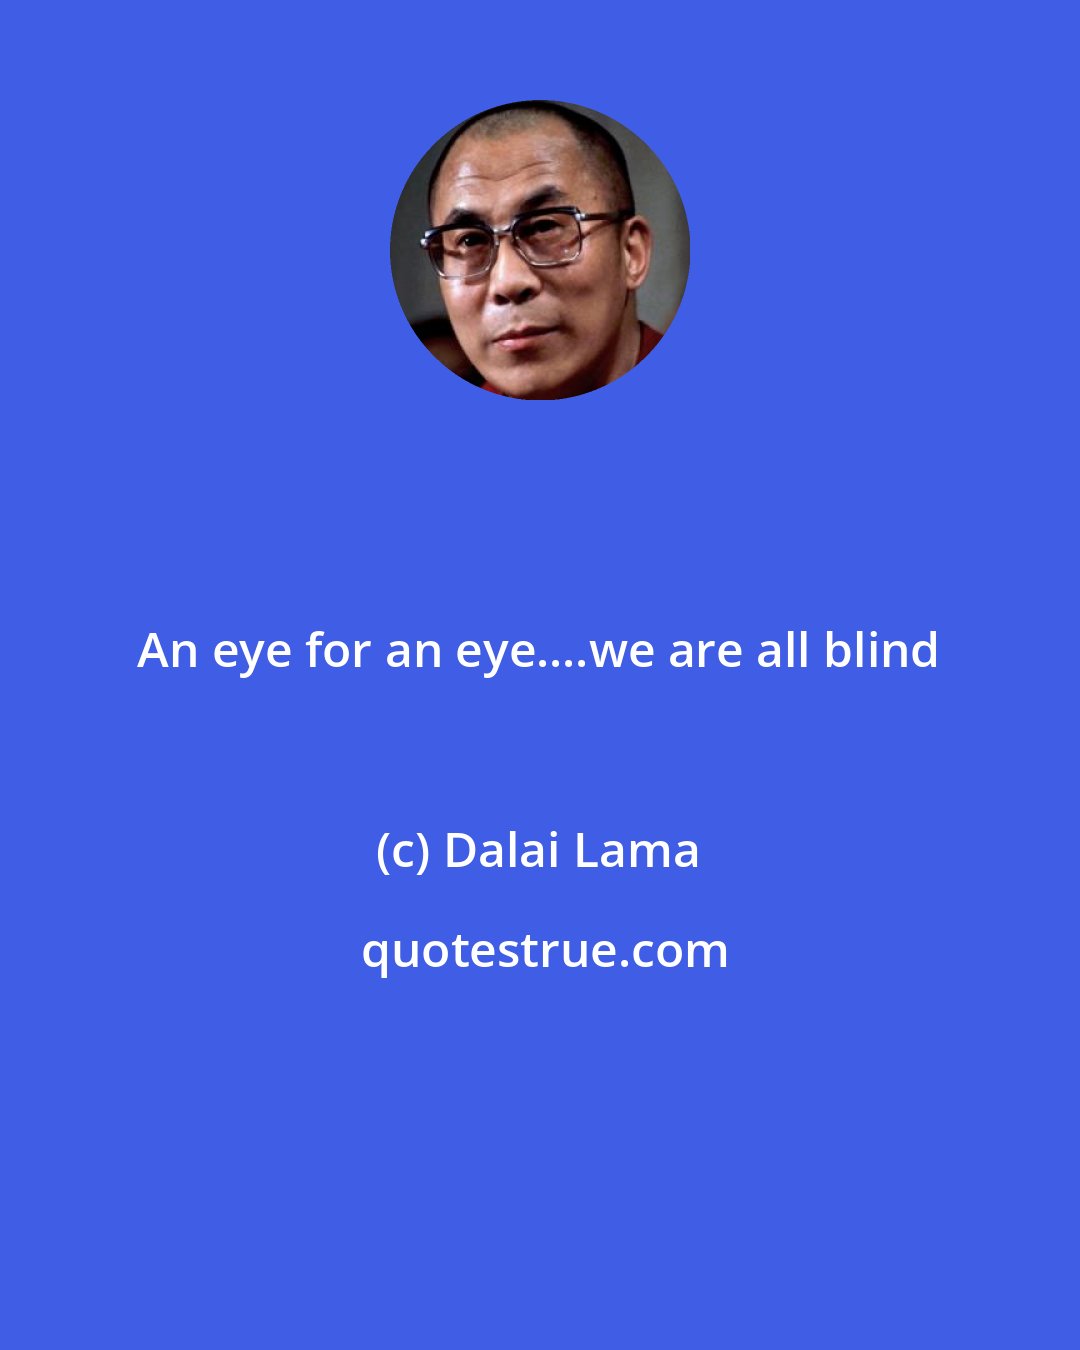 Dalai Lama: An eye for an eye....we are all blind